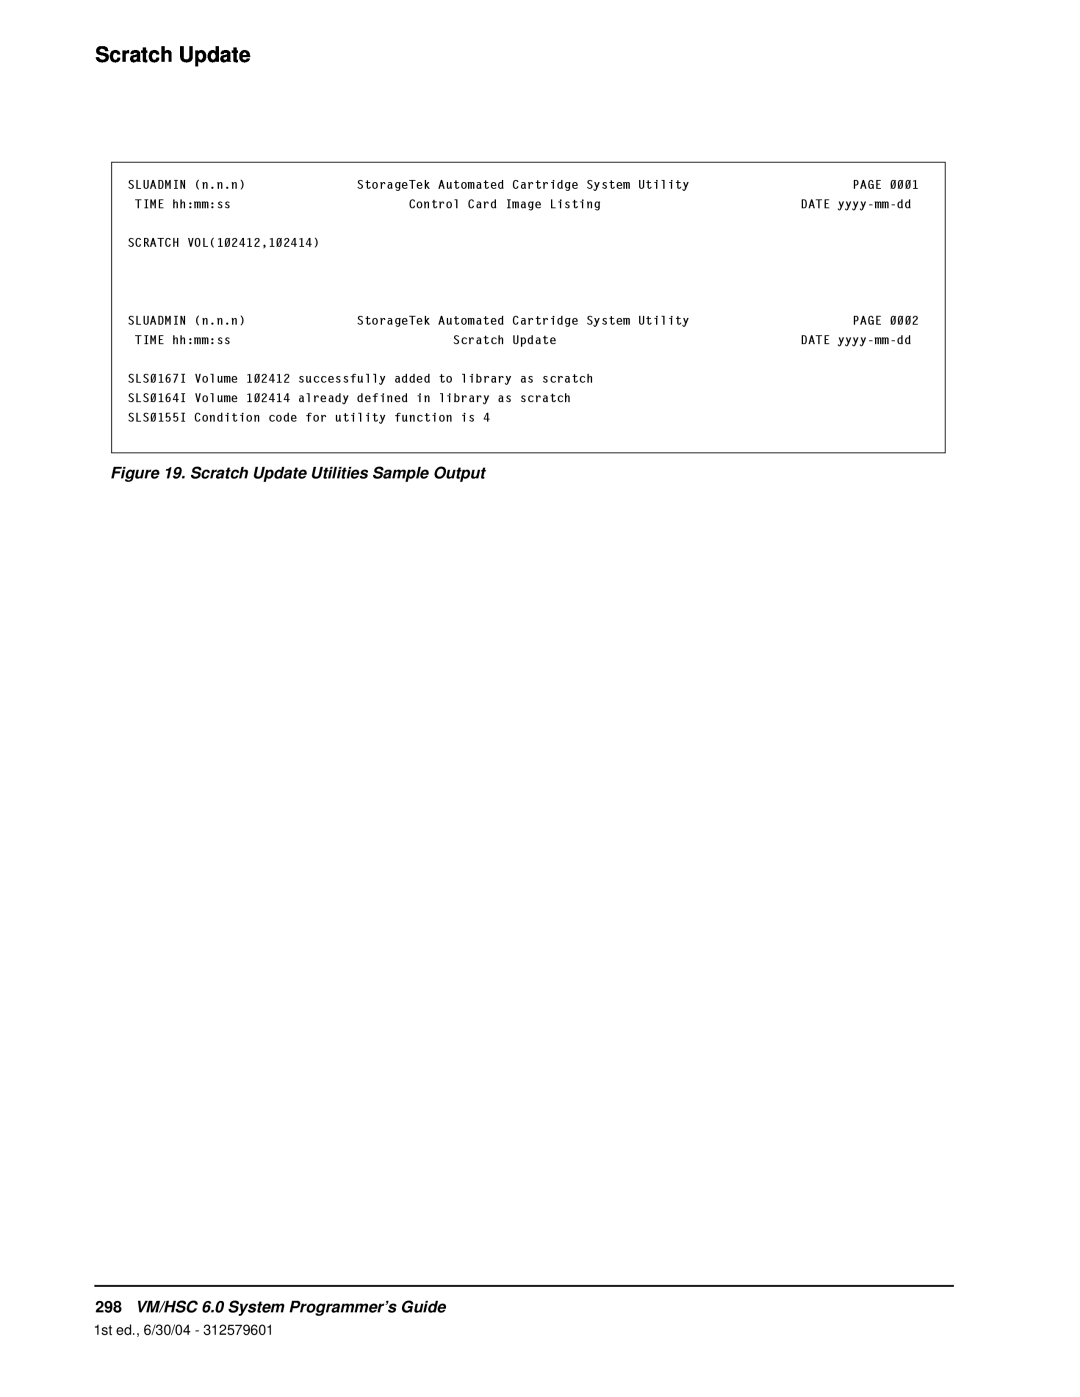 StorageTek manual Scratch Update Utilities Sample Output, 298VM/HSC 6.0 System Programmer’s Guide, 1st ed., 6/30/04 